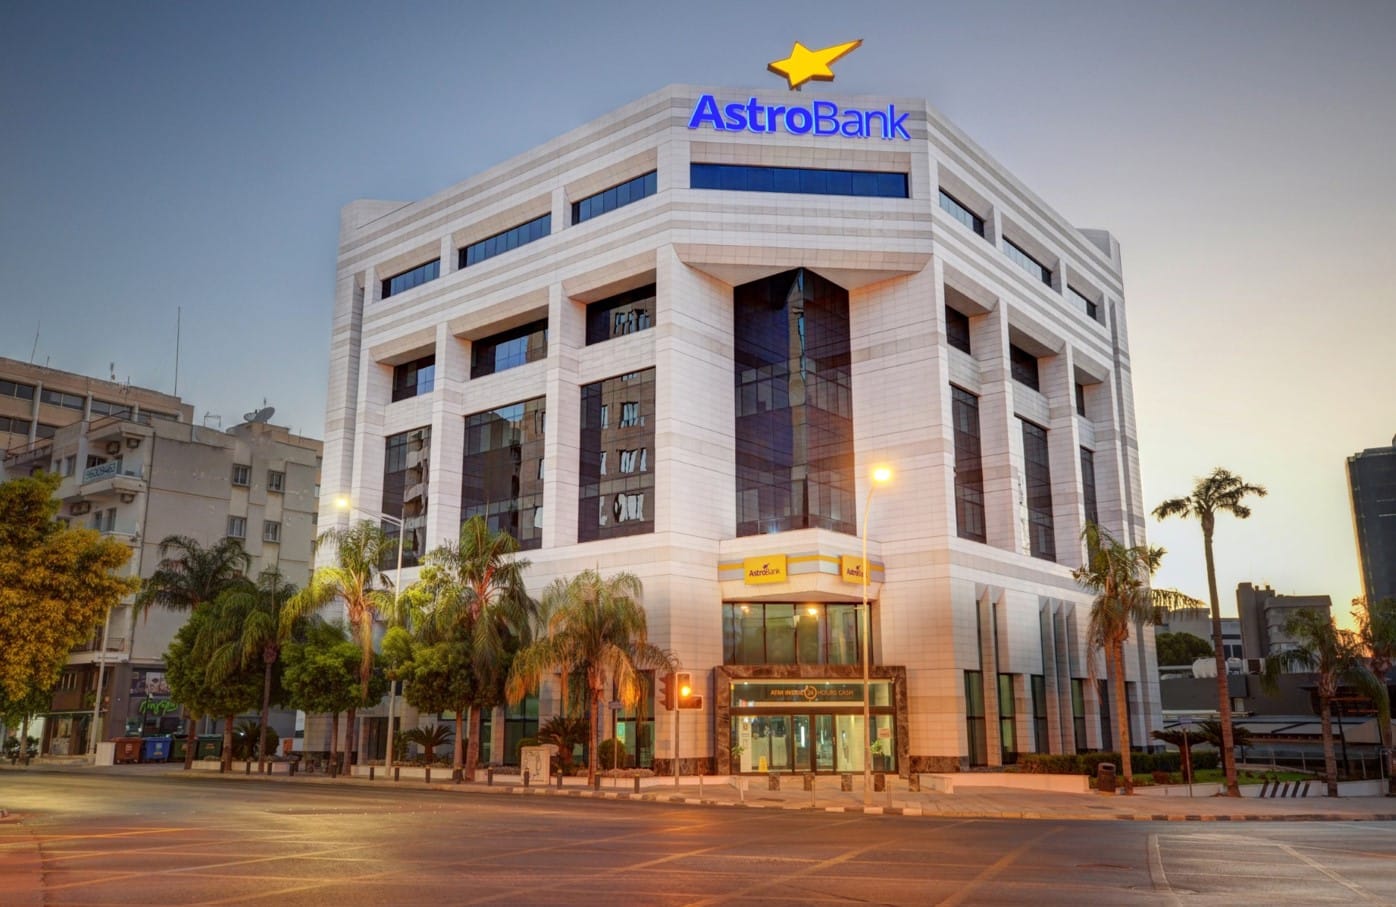 image AstroBank raises deposit interest rates